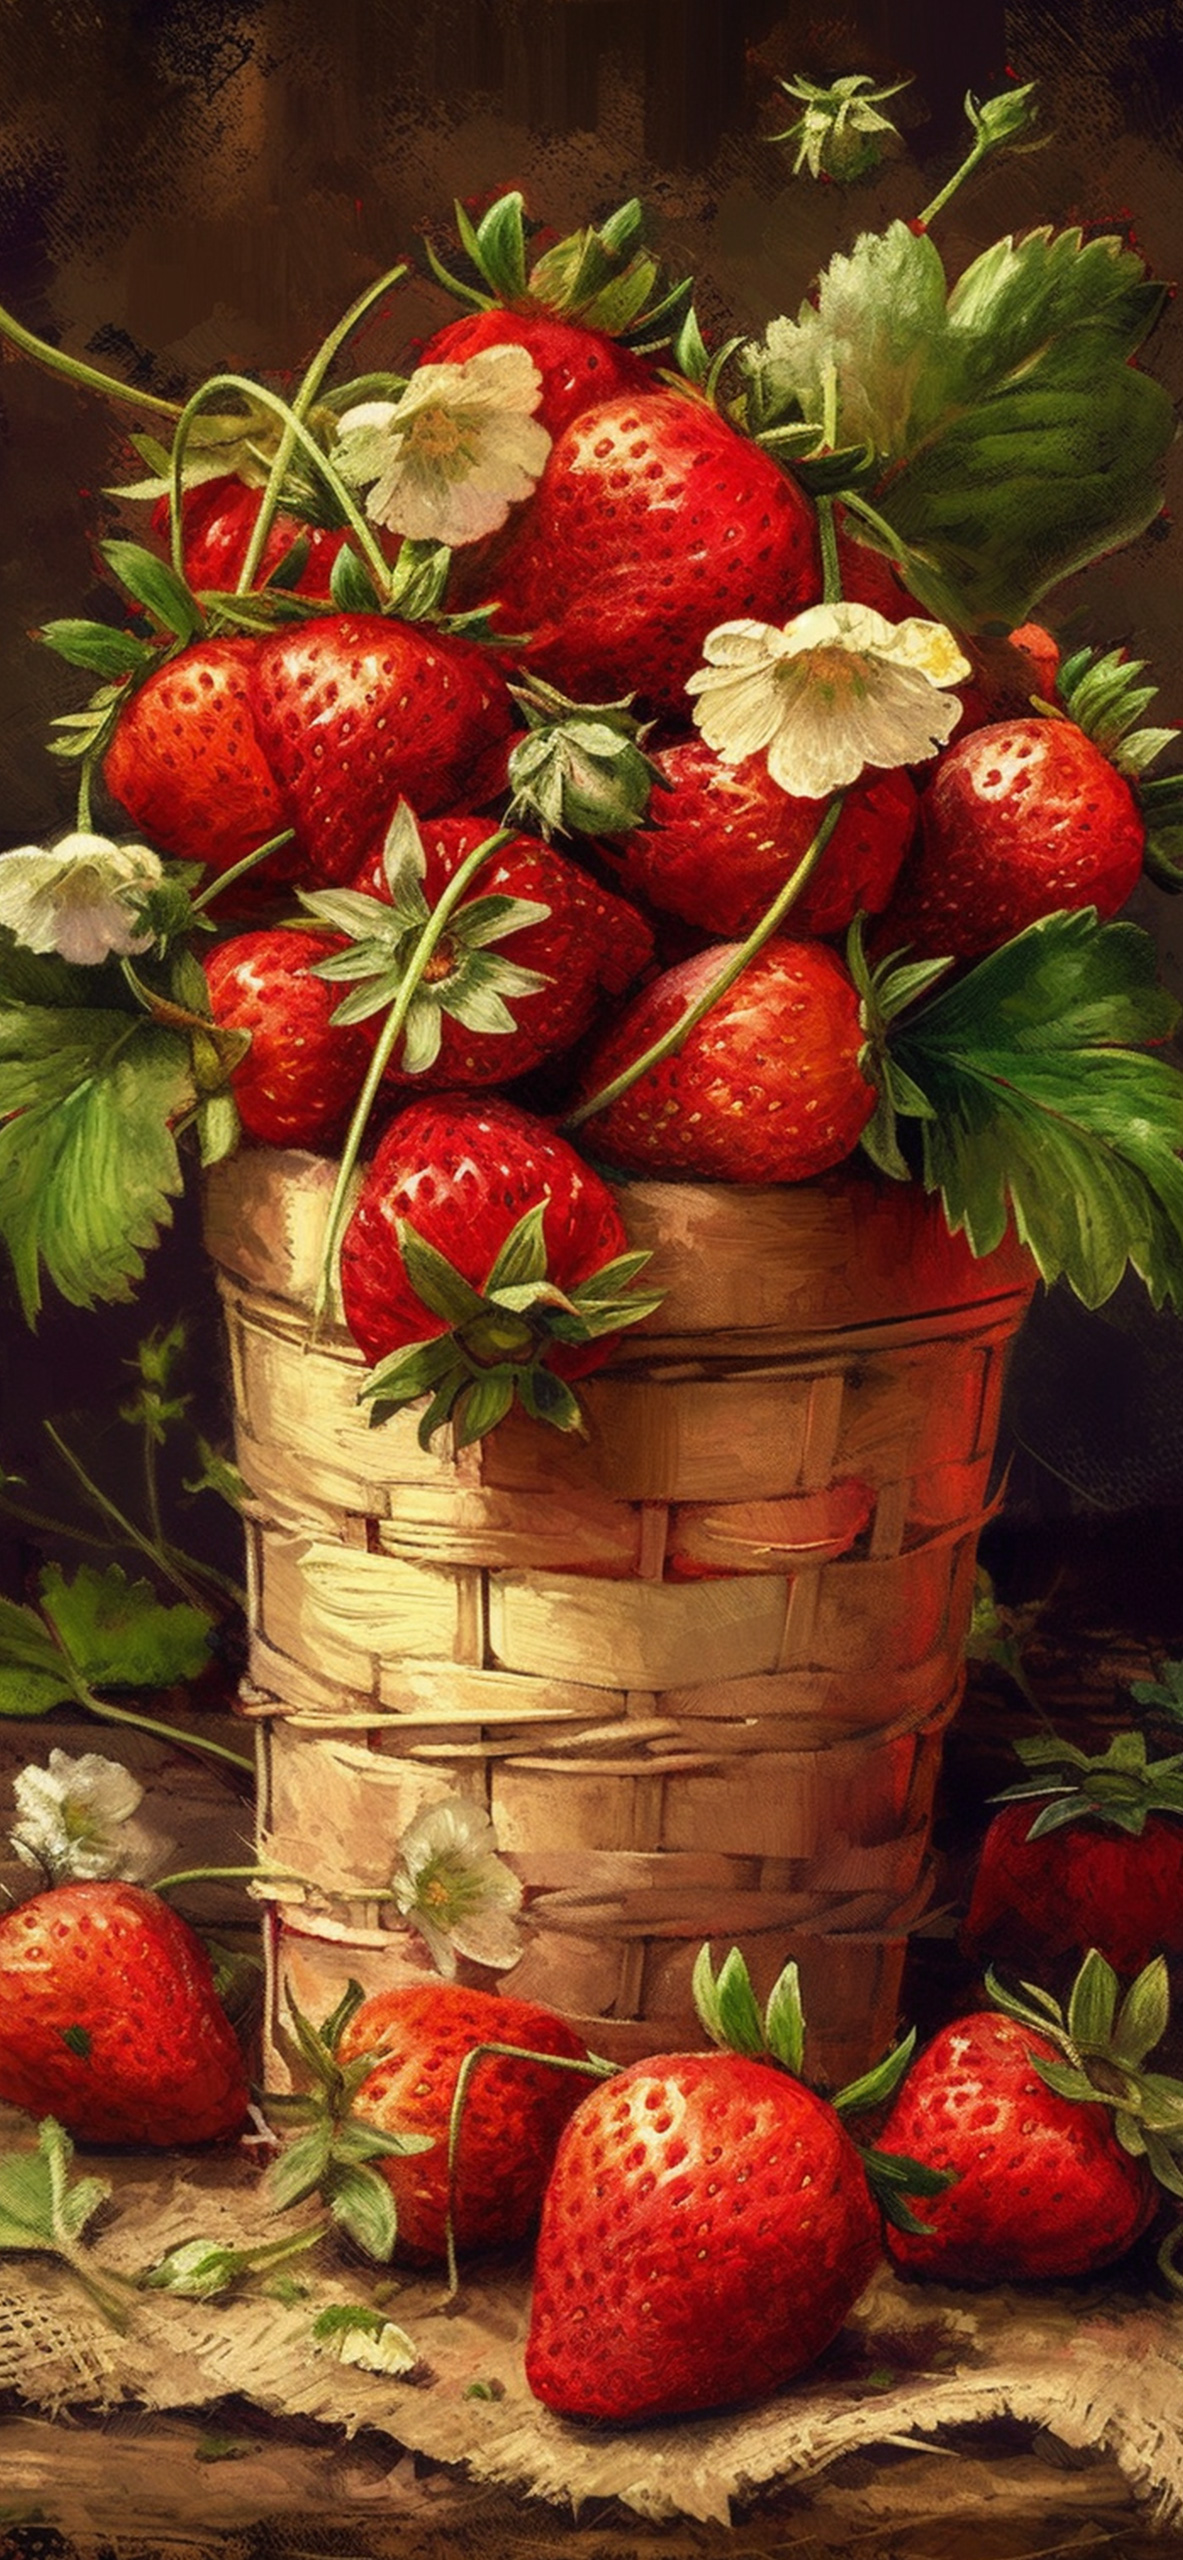 strawberries in the basket art wallpaper